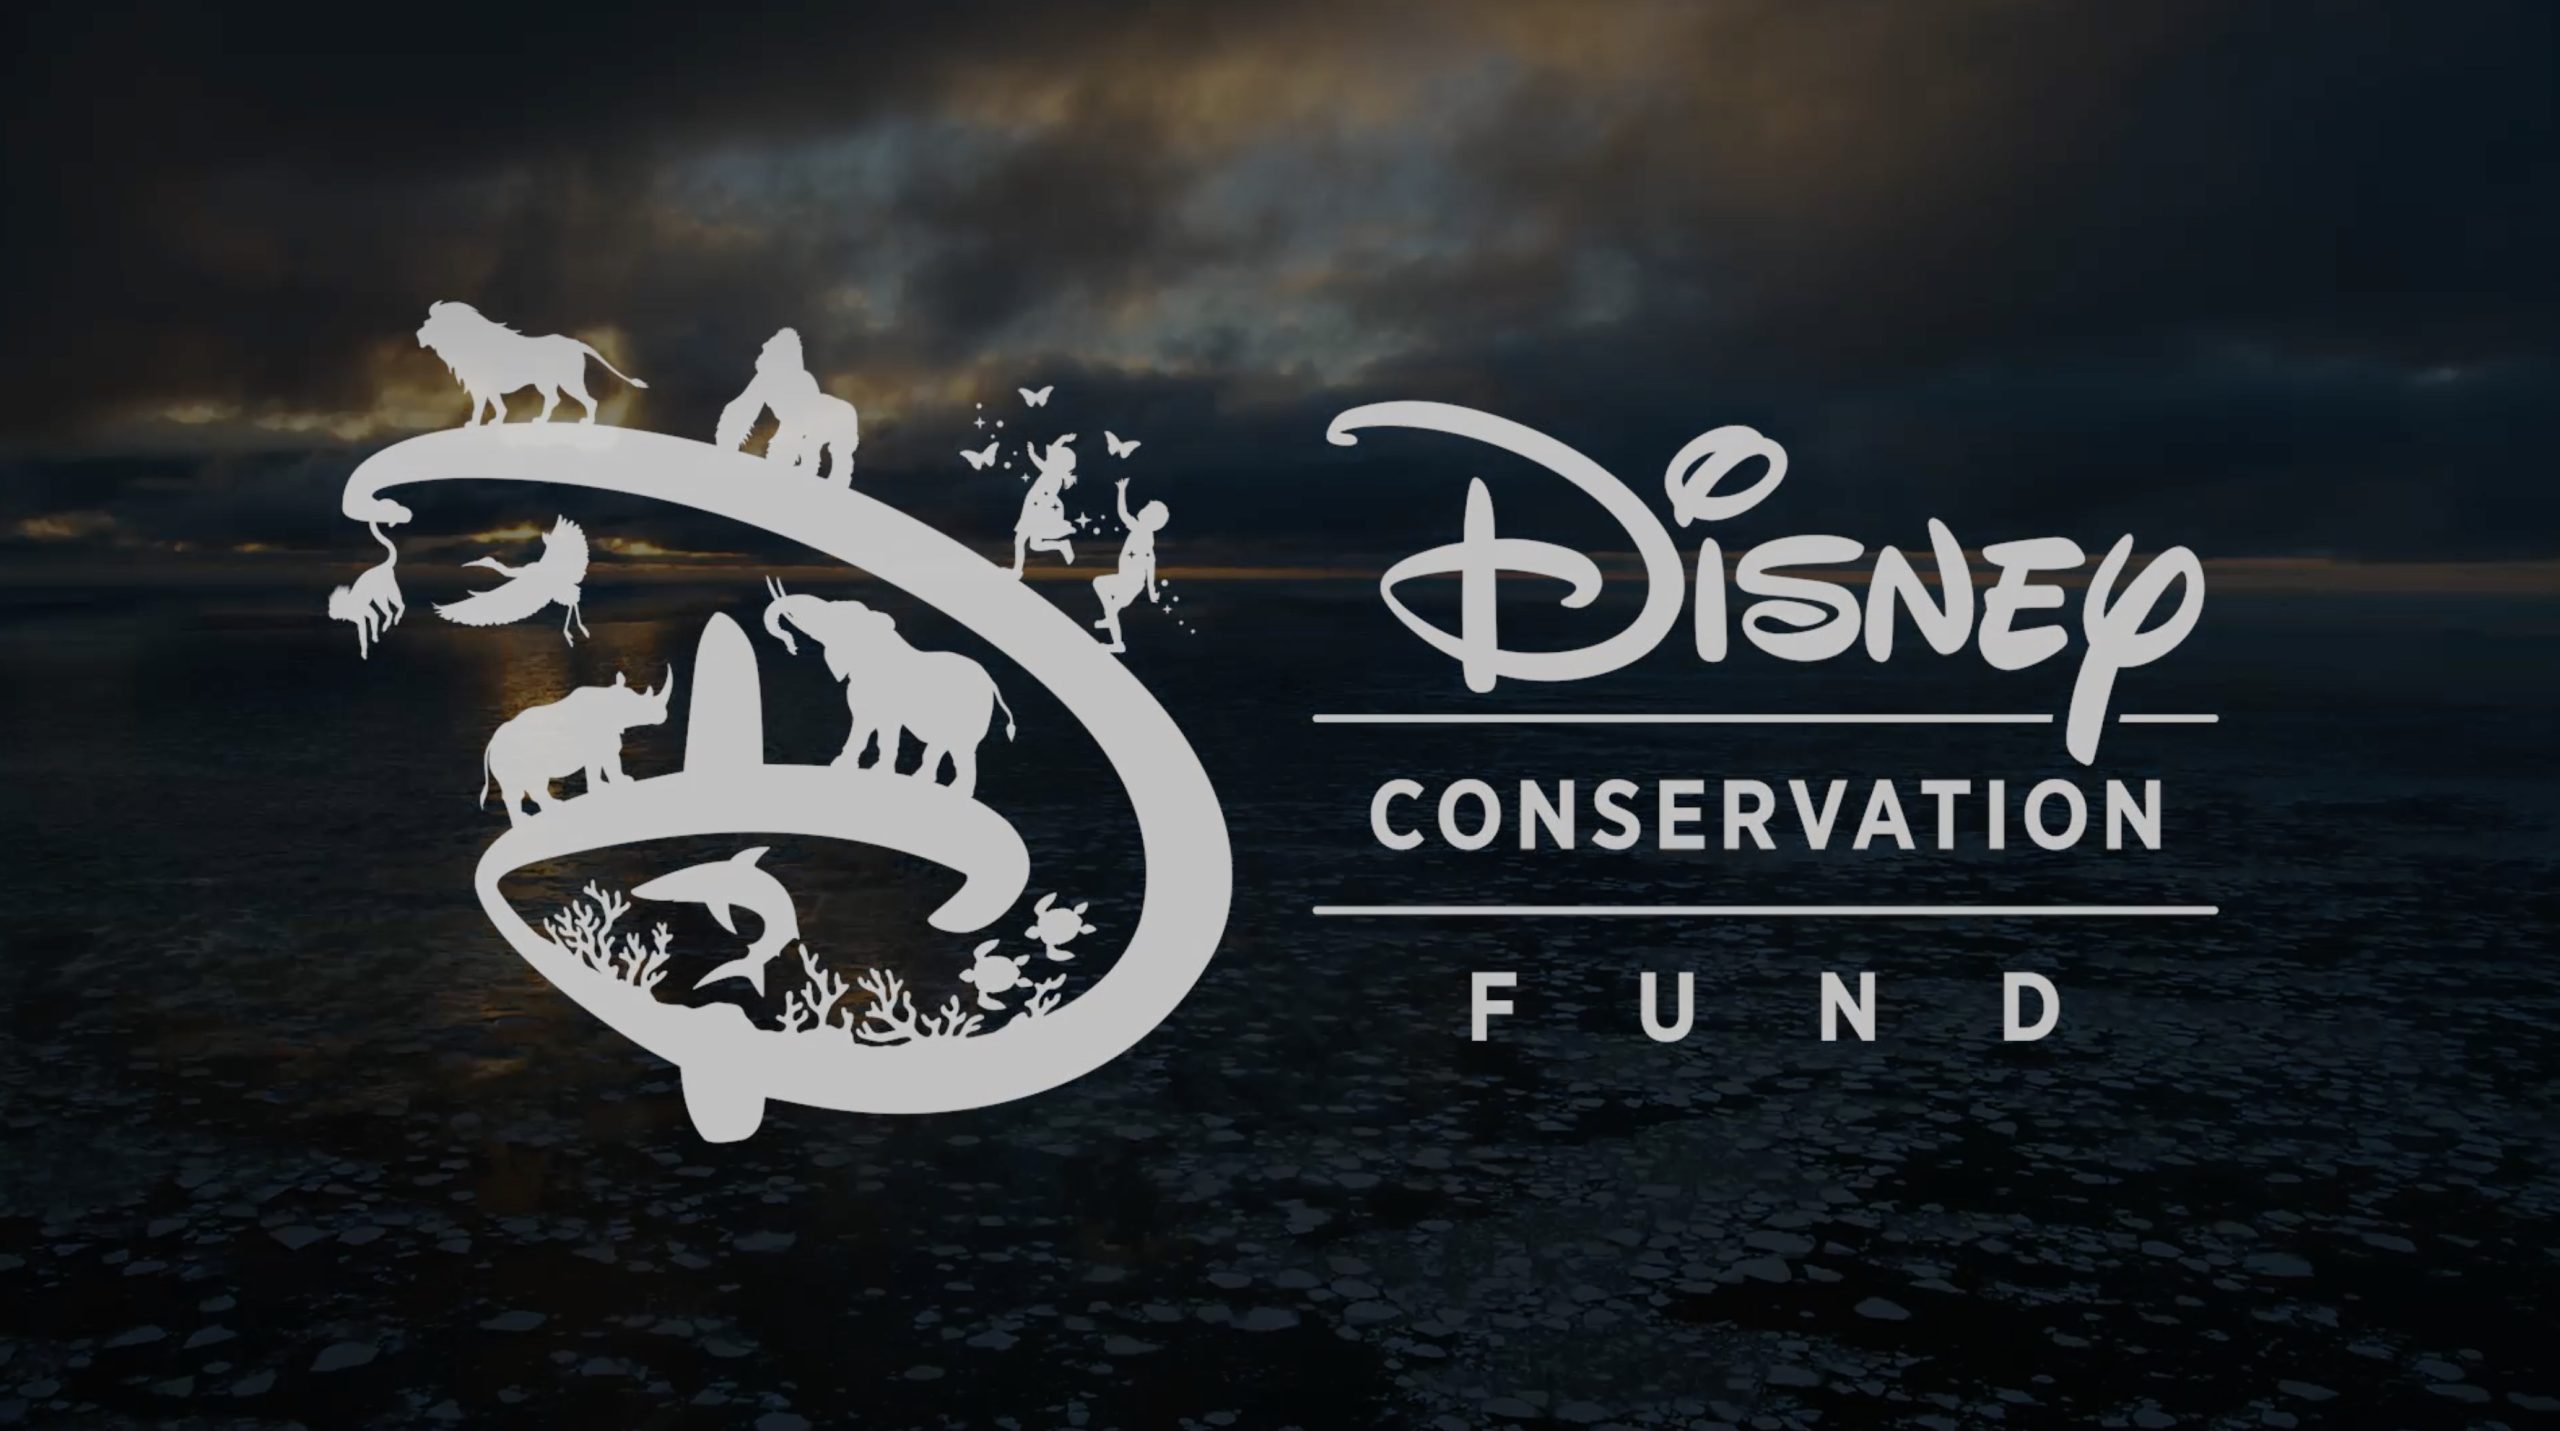 Conservation - Disney Social Responsibility